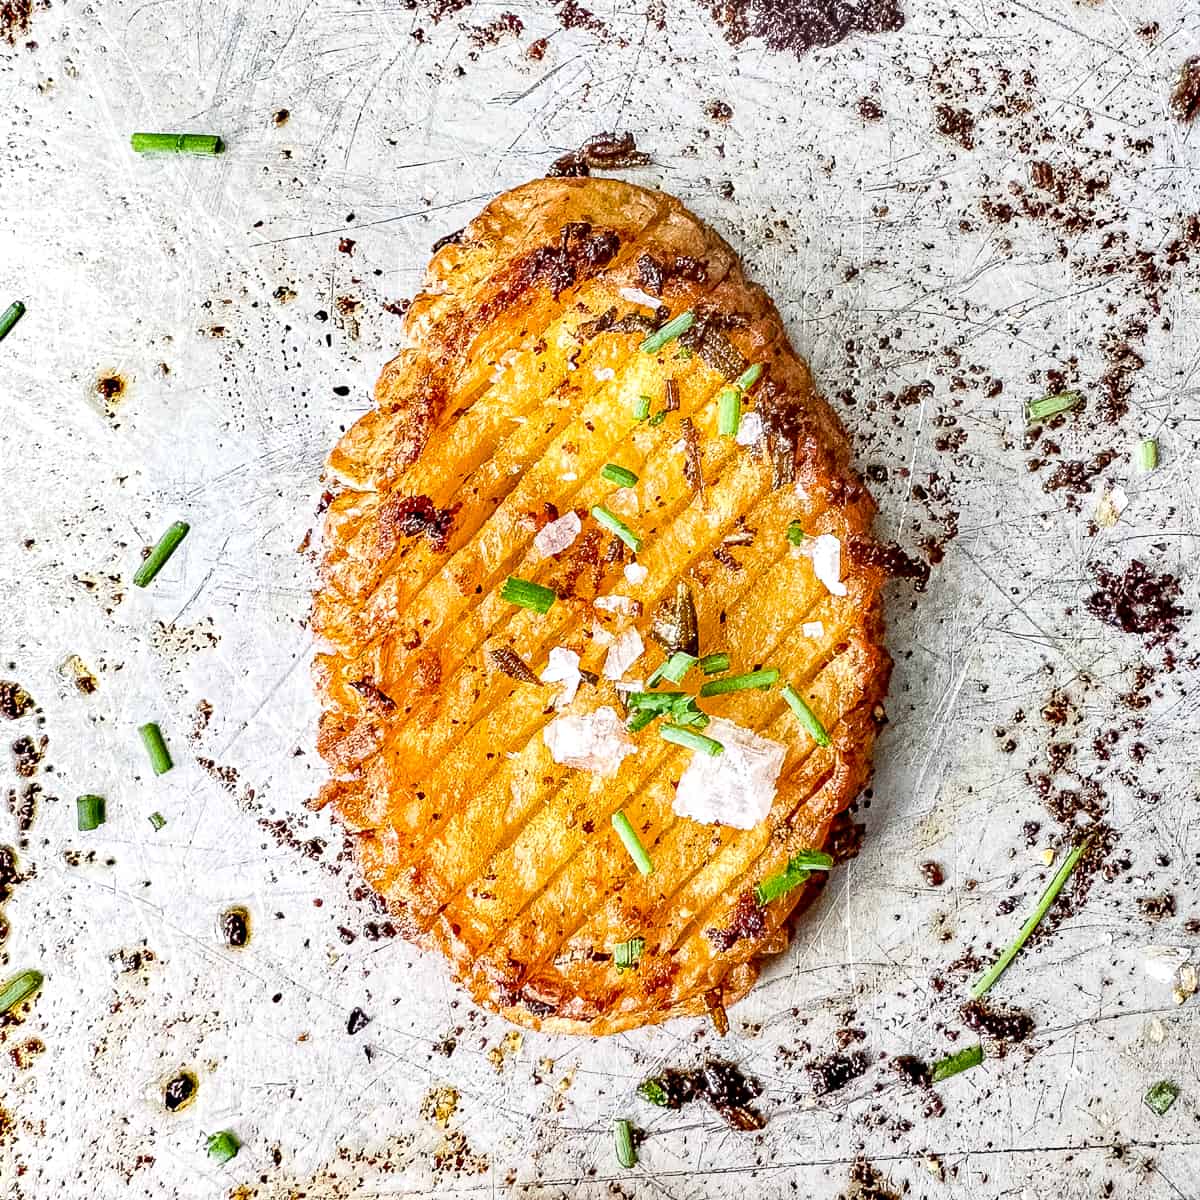 Crispy accordion potato with herbs and flaky salt on a sheet pan.